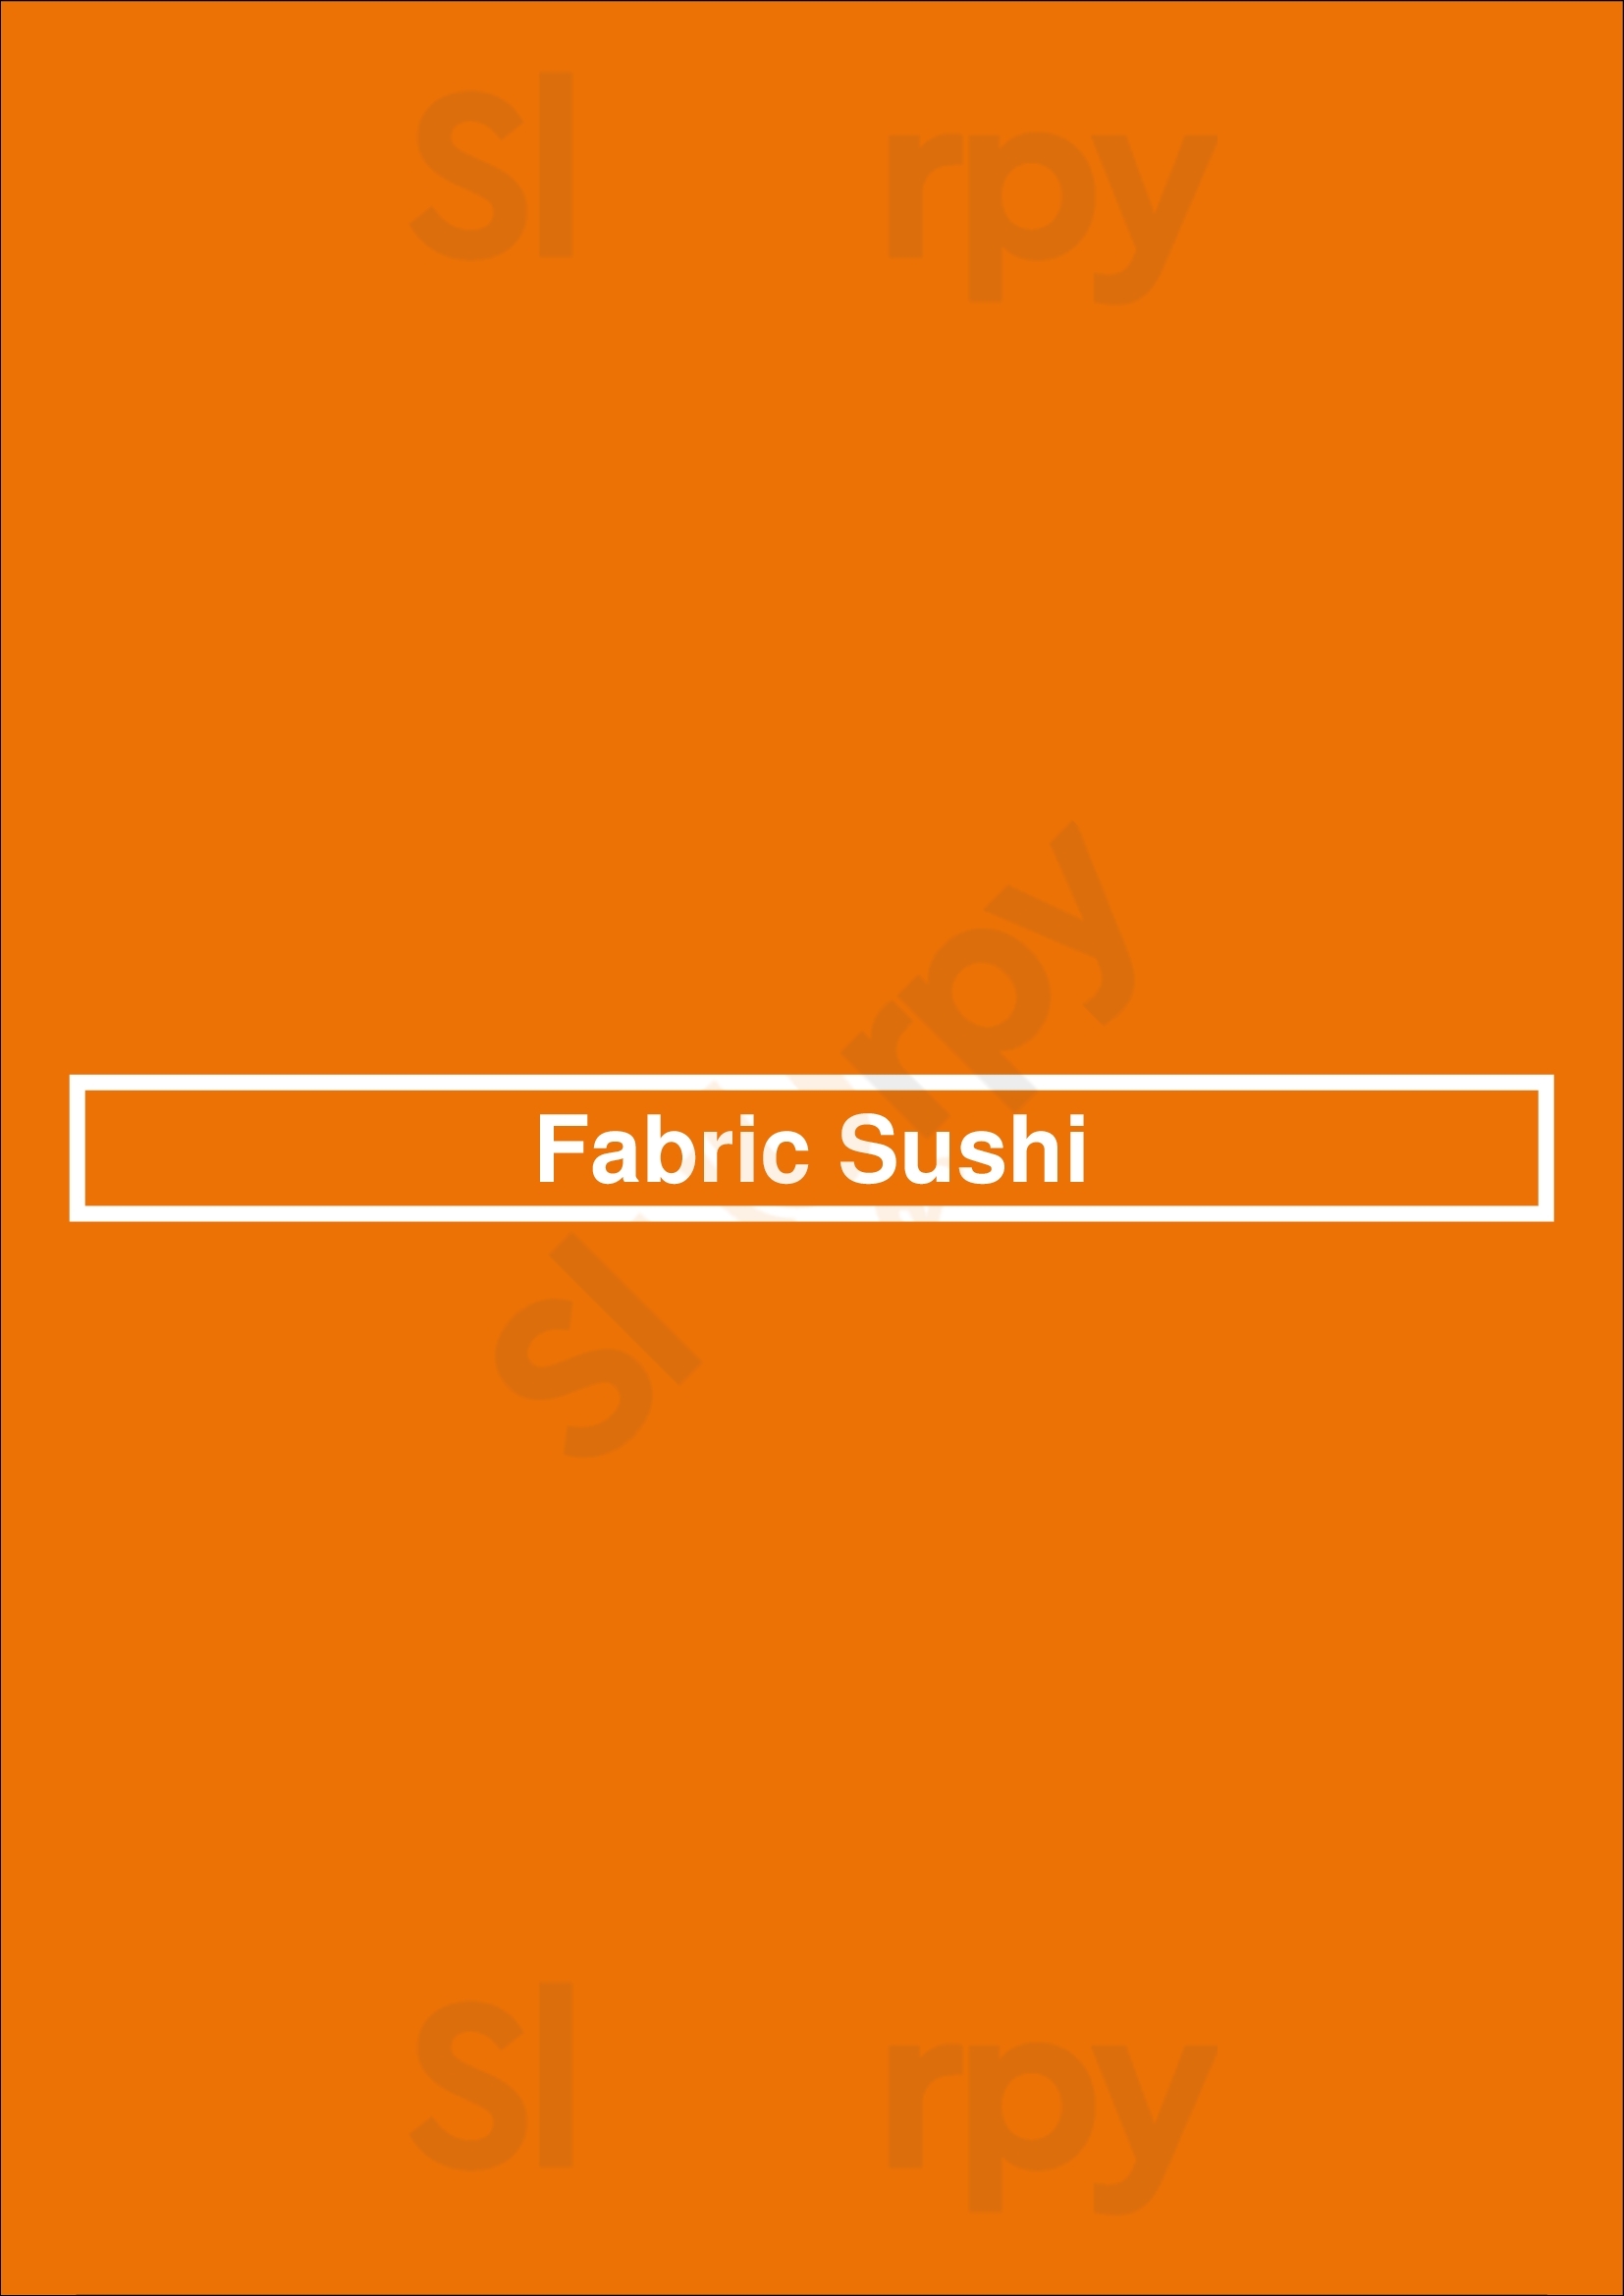 Fabric Sushi Buenos Aires Menu - 1